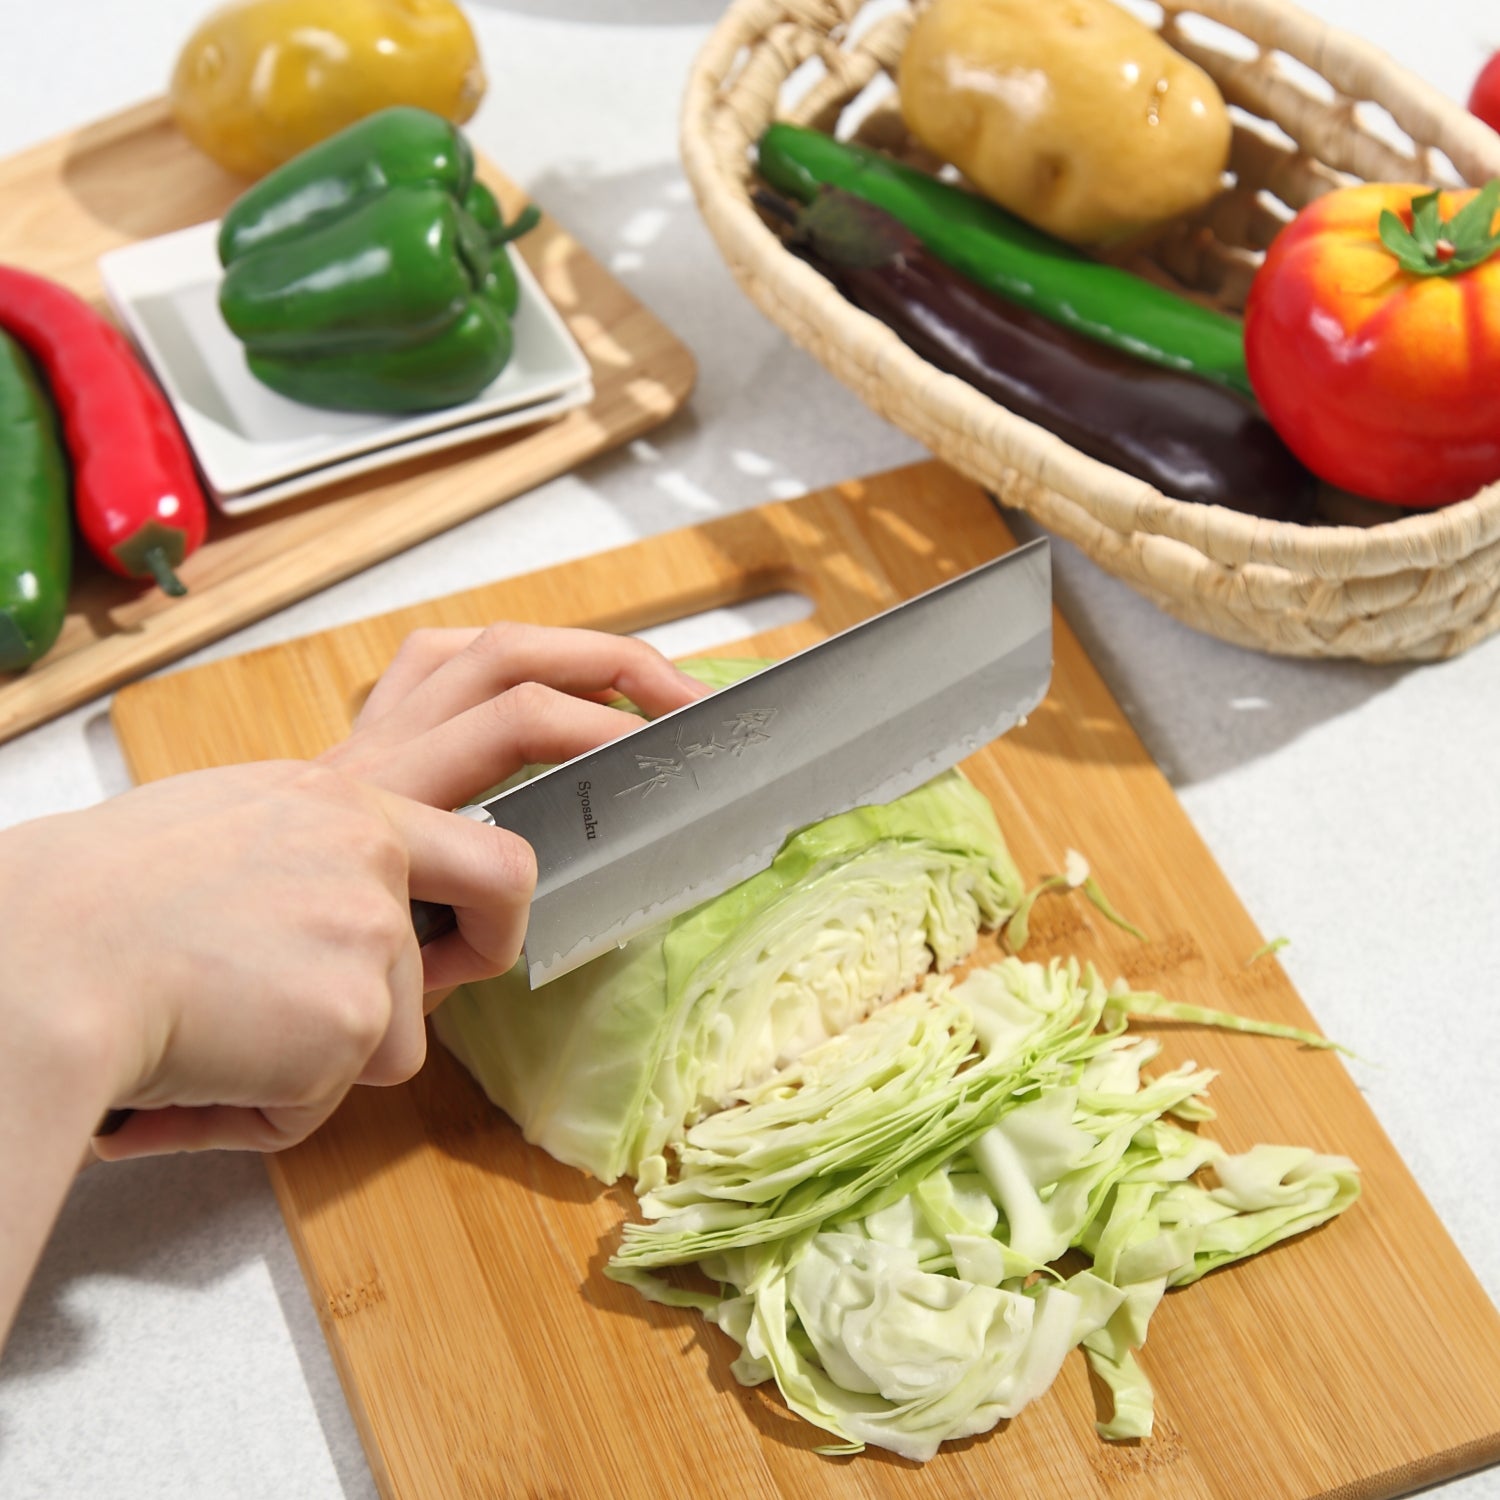 Professional Japanese Deba Knife Chef Knife Kitchen Knife Cleaver Slicer  Stainless Steel Kitchen Knives Kitchen Tools Santoku Knife Cooking Cutter  Meat Slicing knife Utility Knife Chef Knives Sashimi Knife Sushi Knife Fish